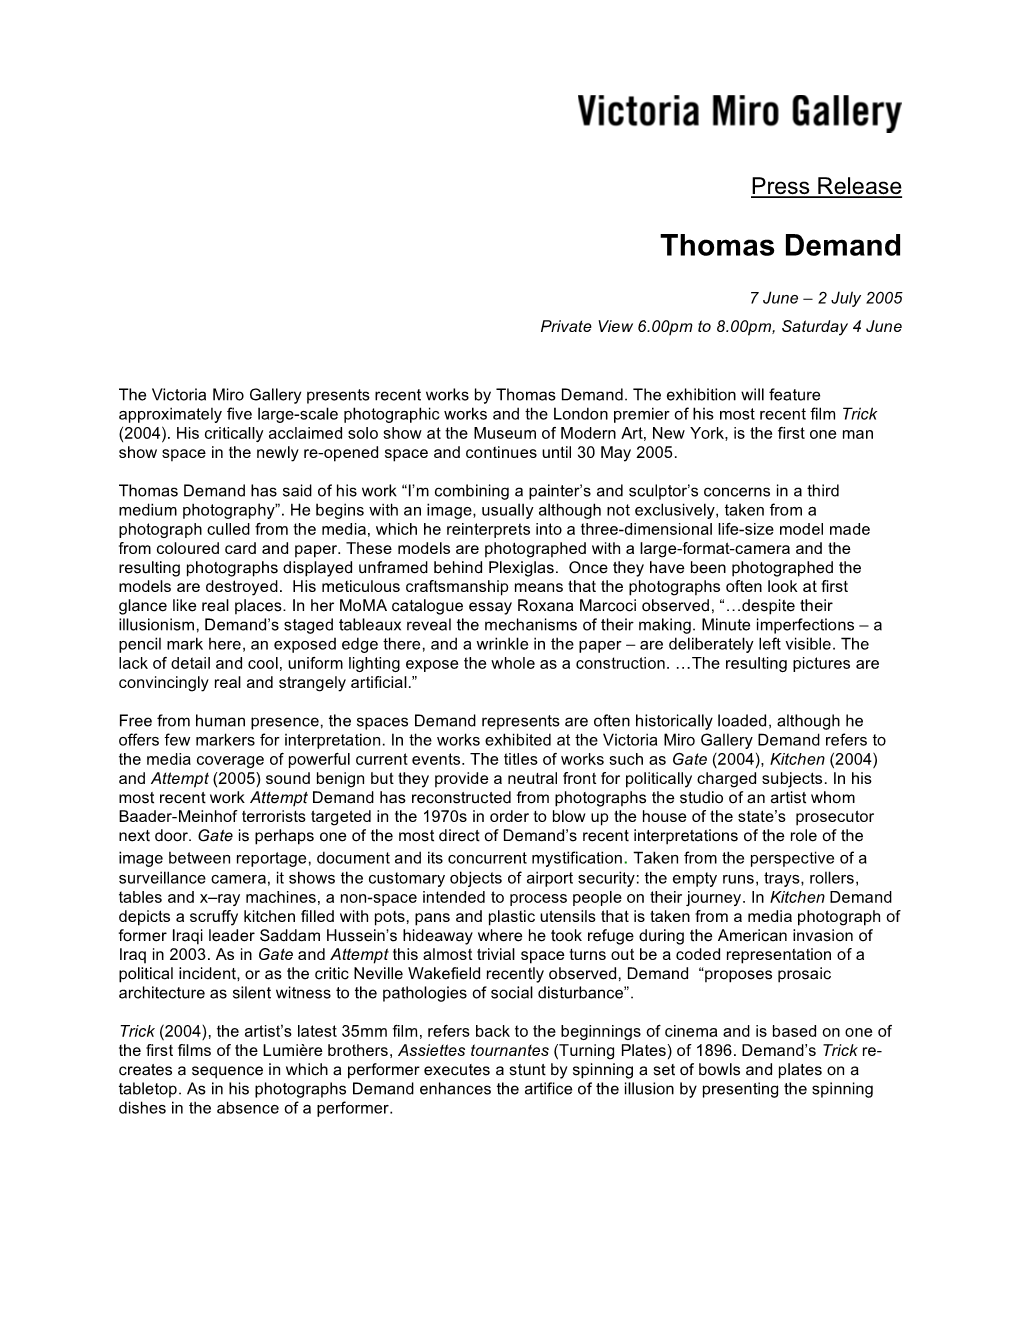 Thomas Demand